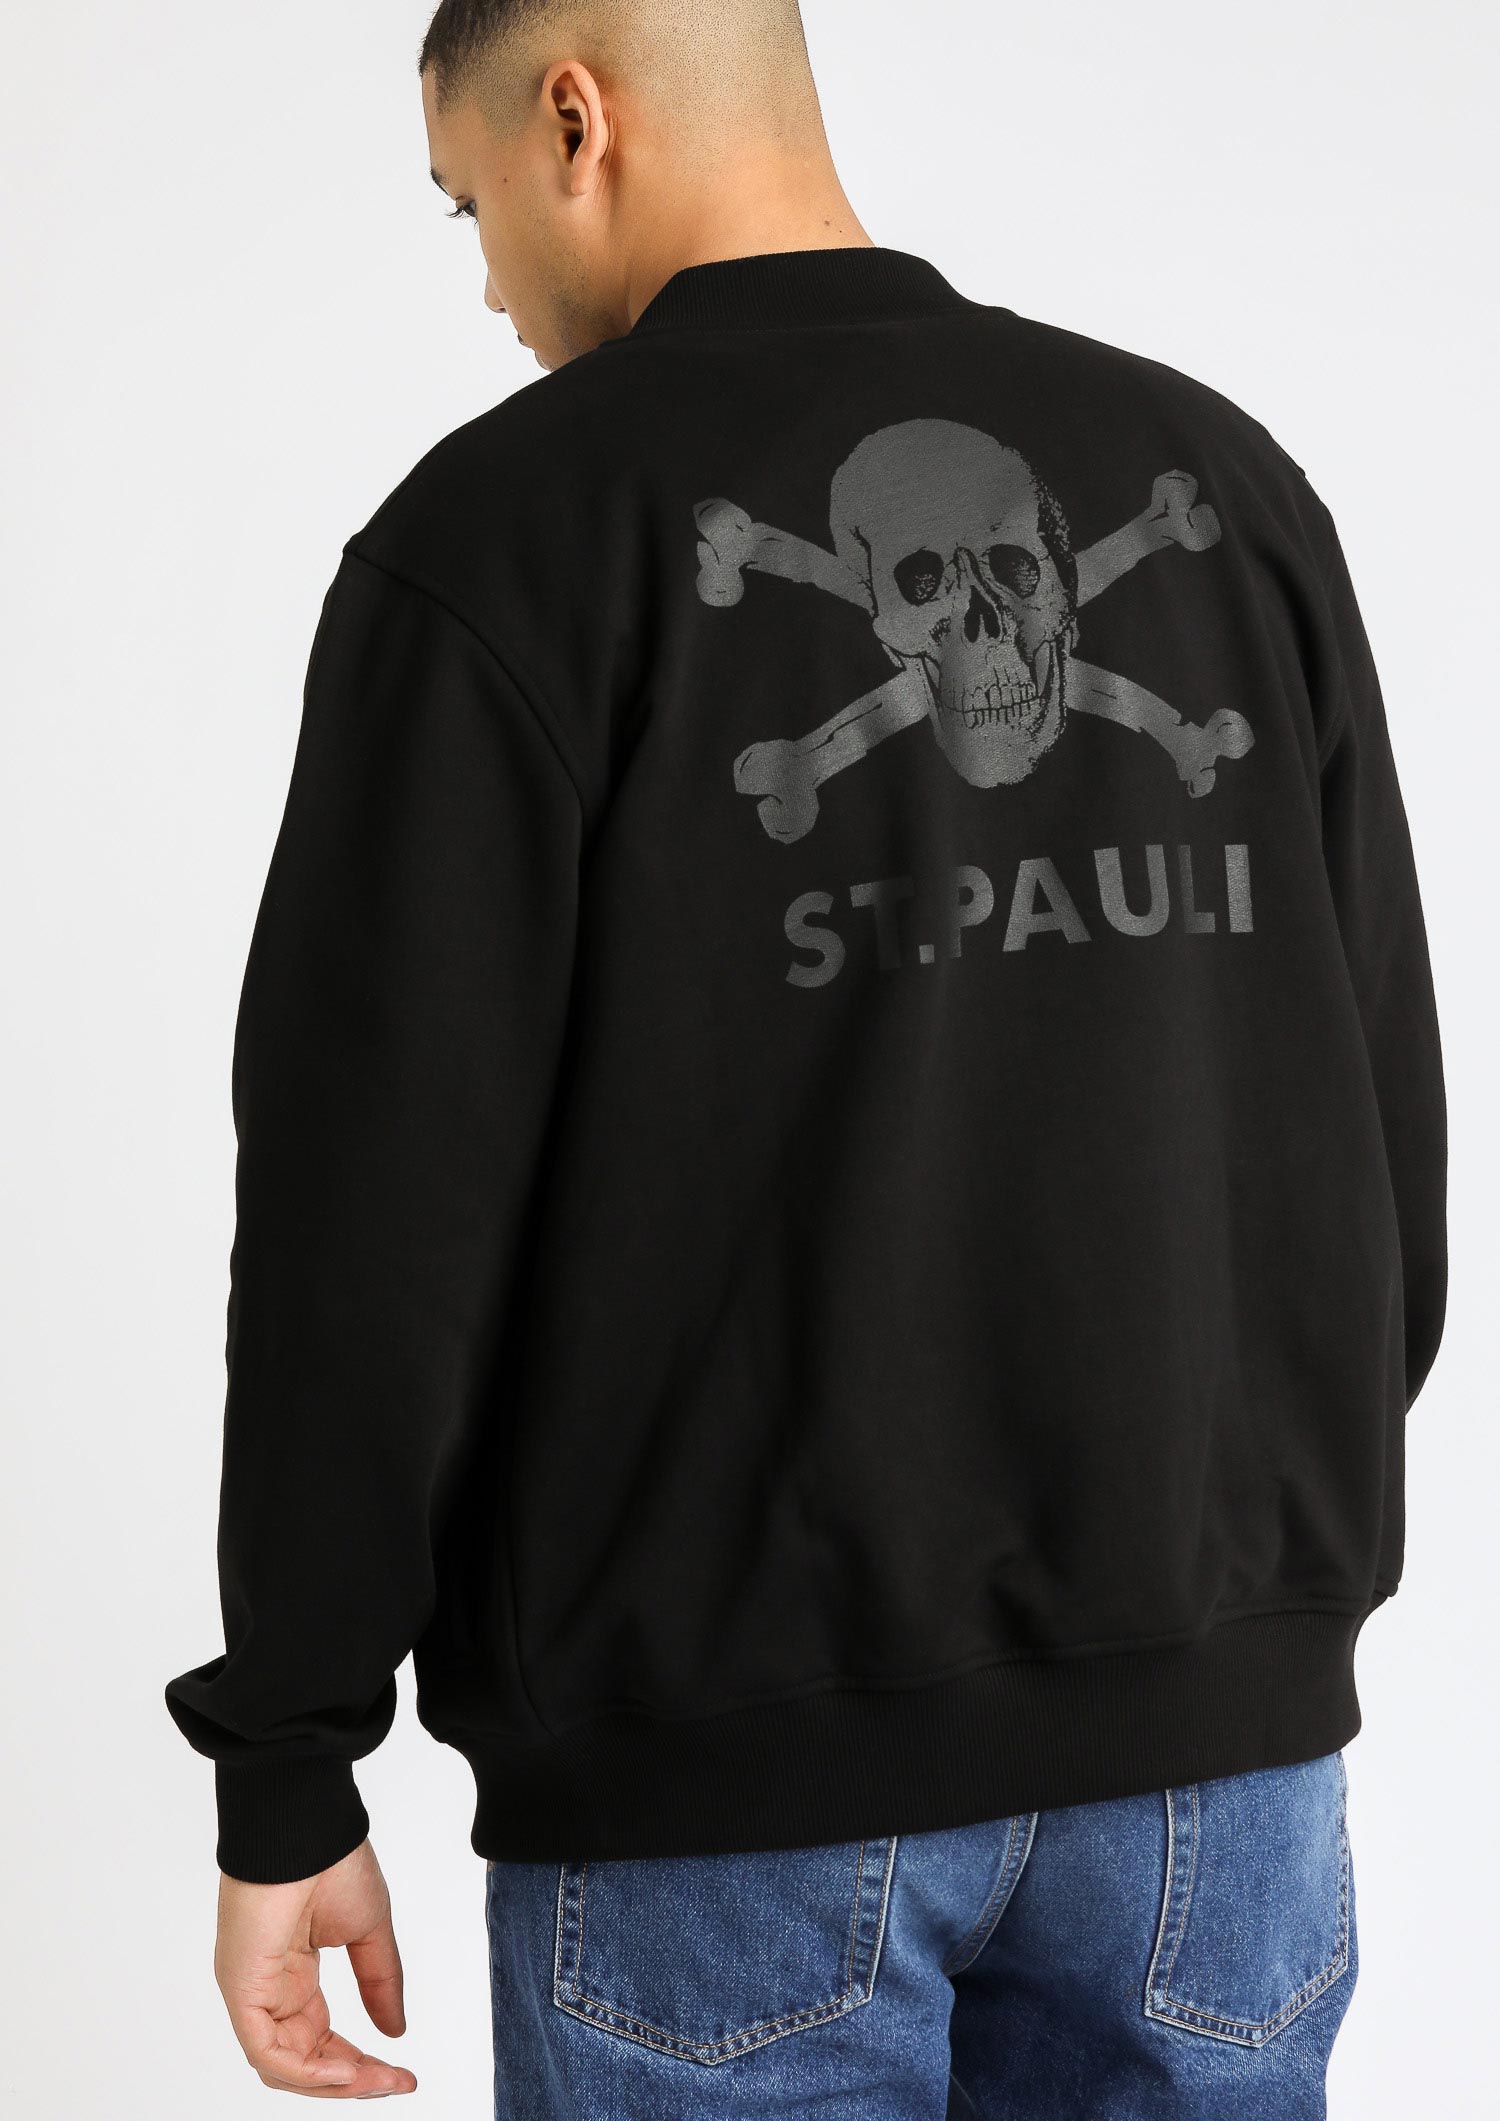 College Jacket "All Black" Skull and Crossbones 